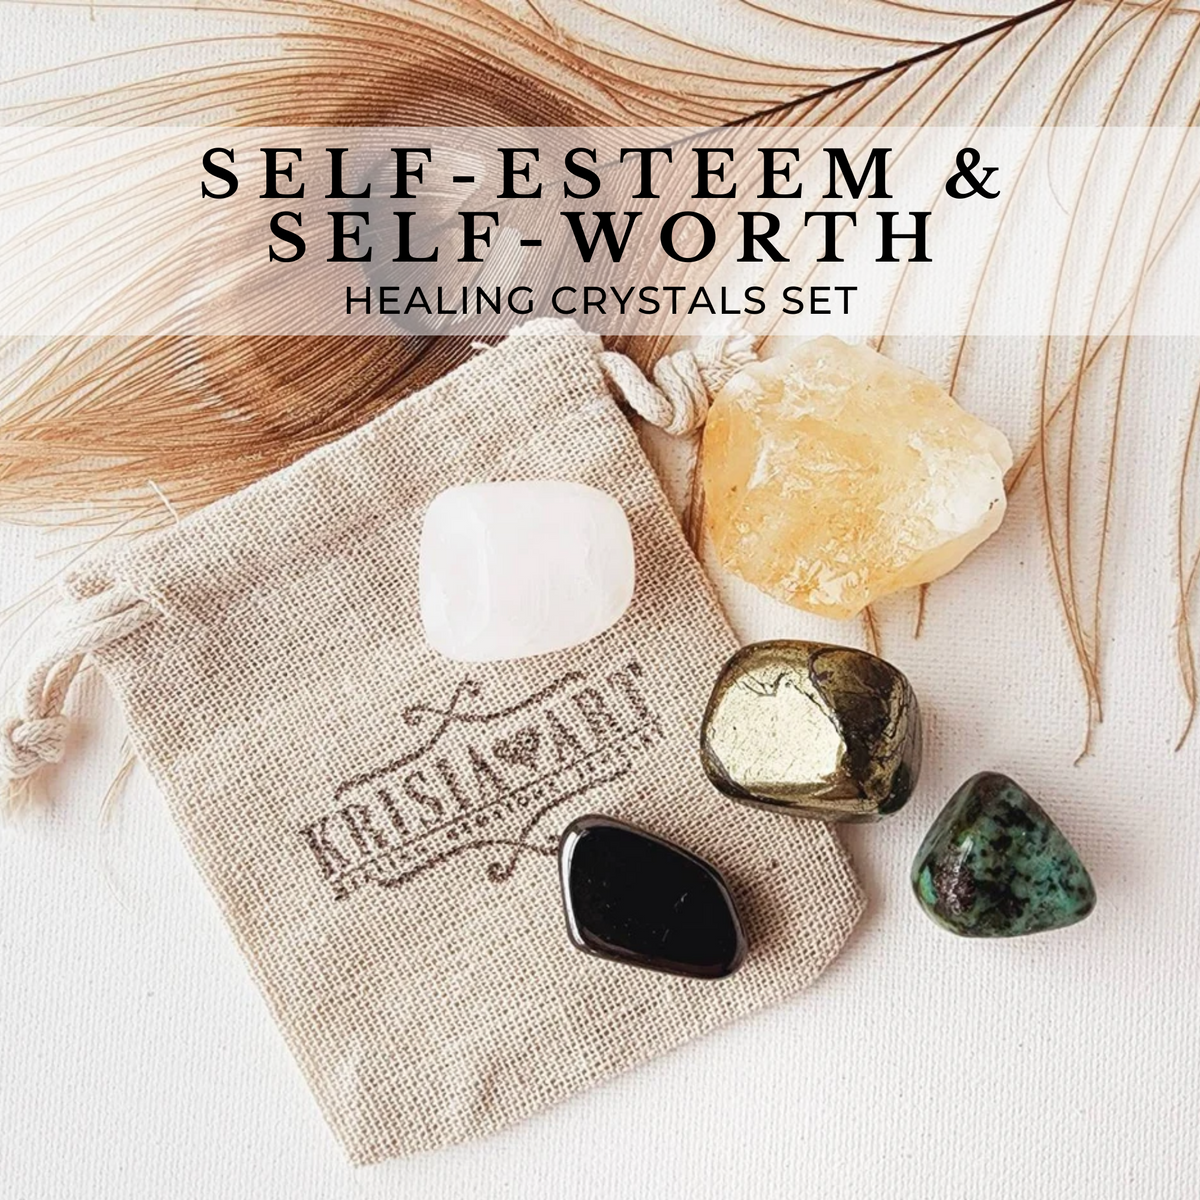 SELF-ESTEEM & SELF-WORTH crystal set for self-love, self-confidence and solar plexus chakra meditation. Citrine, Magnetic Hematite, African Turquoise, Pink Calcite, Chalcopyrite